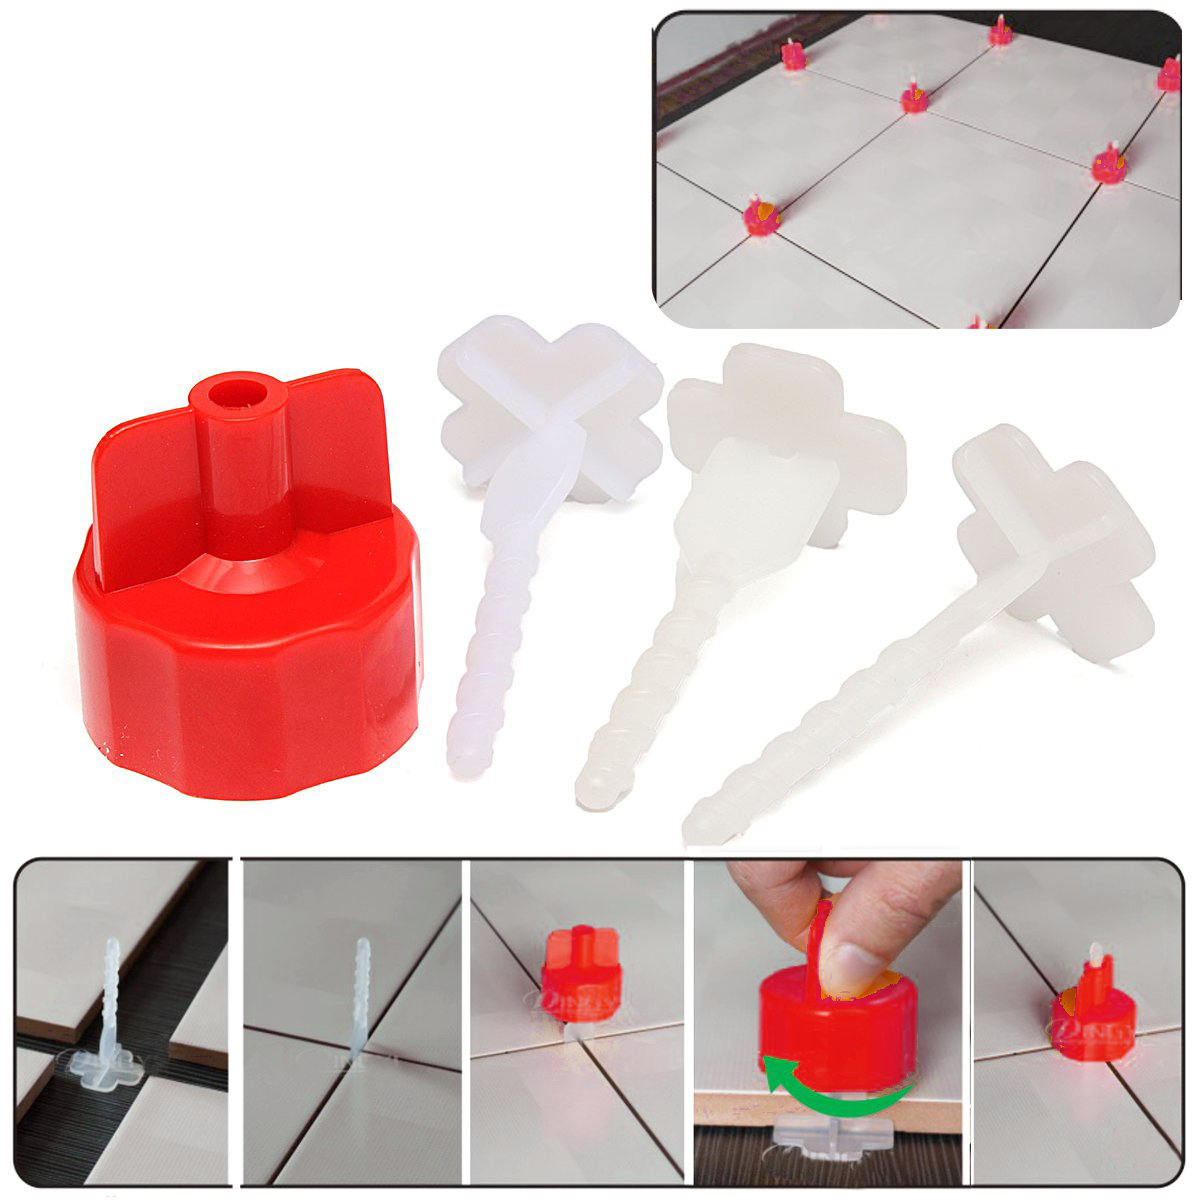 50-Pcs-Flat-Tile-Ceramic-Leveling-System-Kit-Floor-Wall-Spacer-Strap-Tools-Tile-Spacers-1600784-1